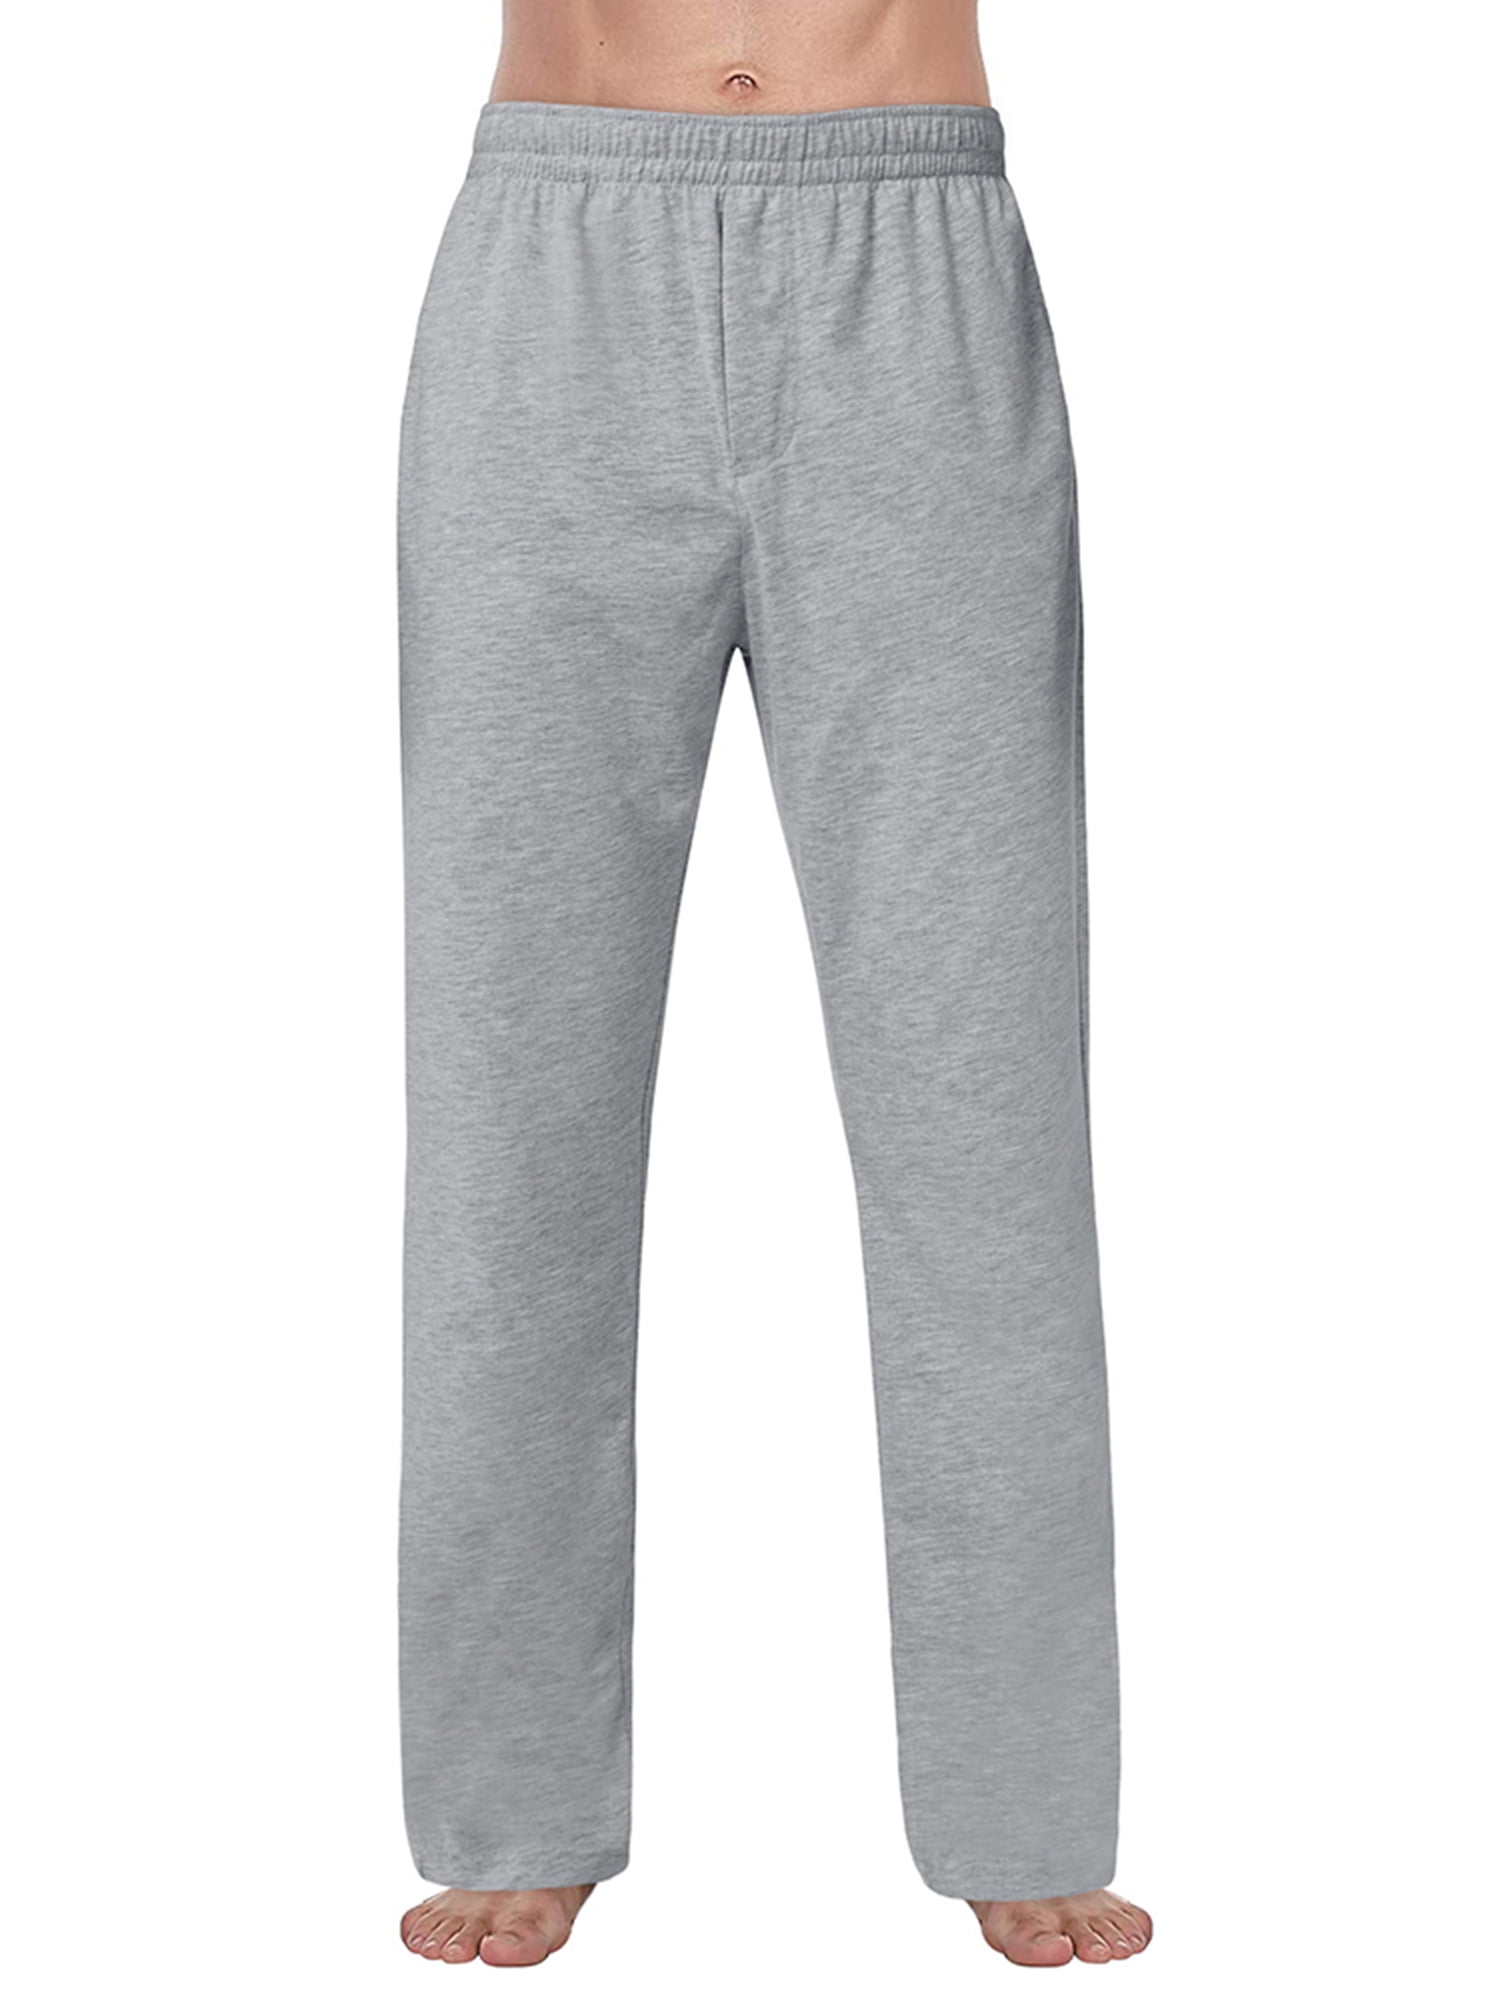 Men's Westend Pajama Pants in Blue/Black Check - Swanndri NZ